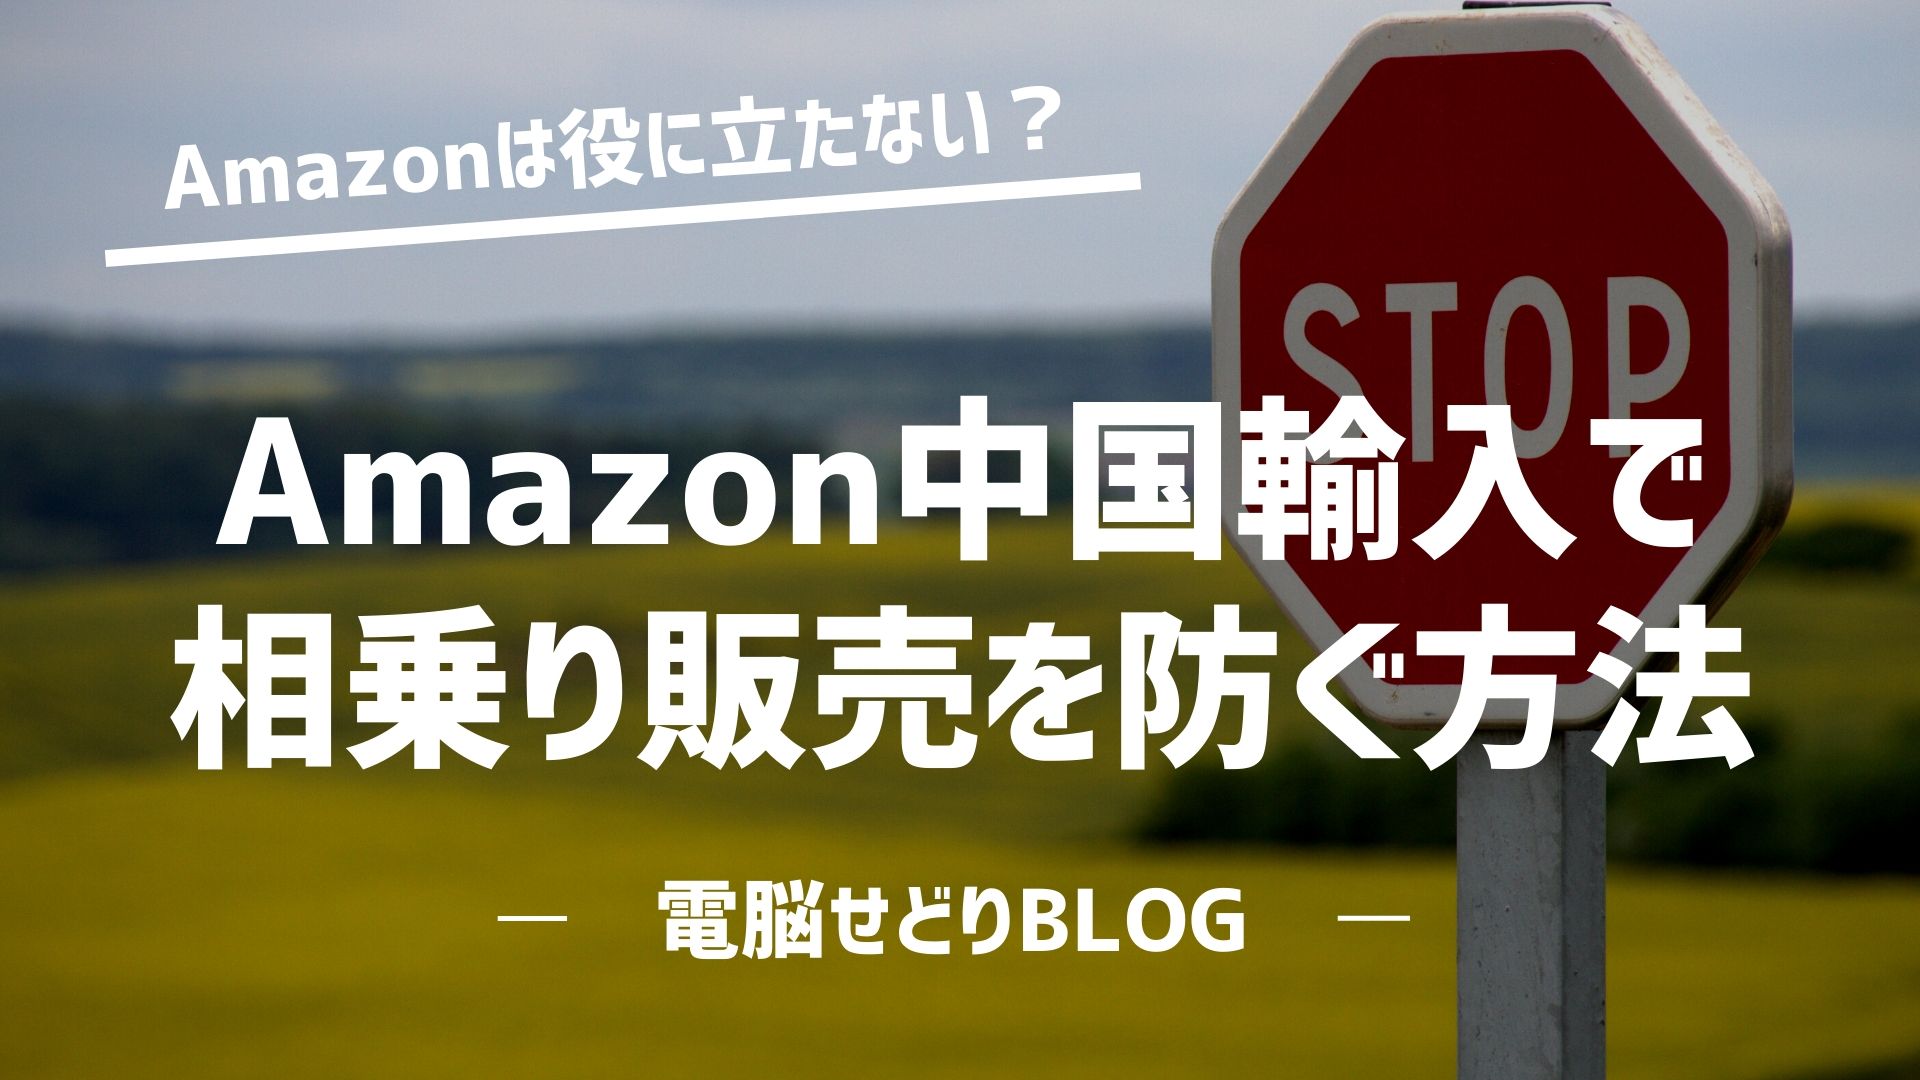 Amazon中国輸入で相乗り出品（販売）を防止/排除する方法とは？⇒『商標取得+Amazonブランド登録』を検討しましょう。